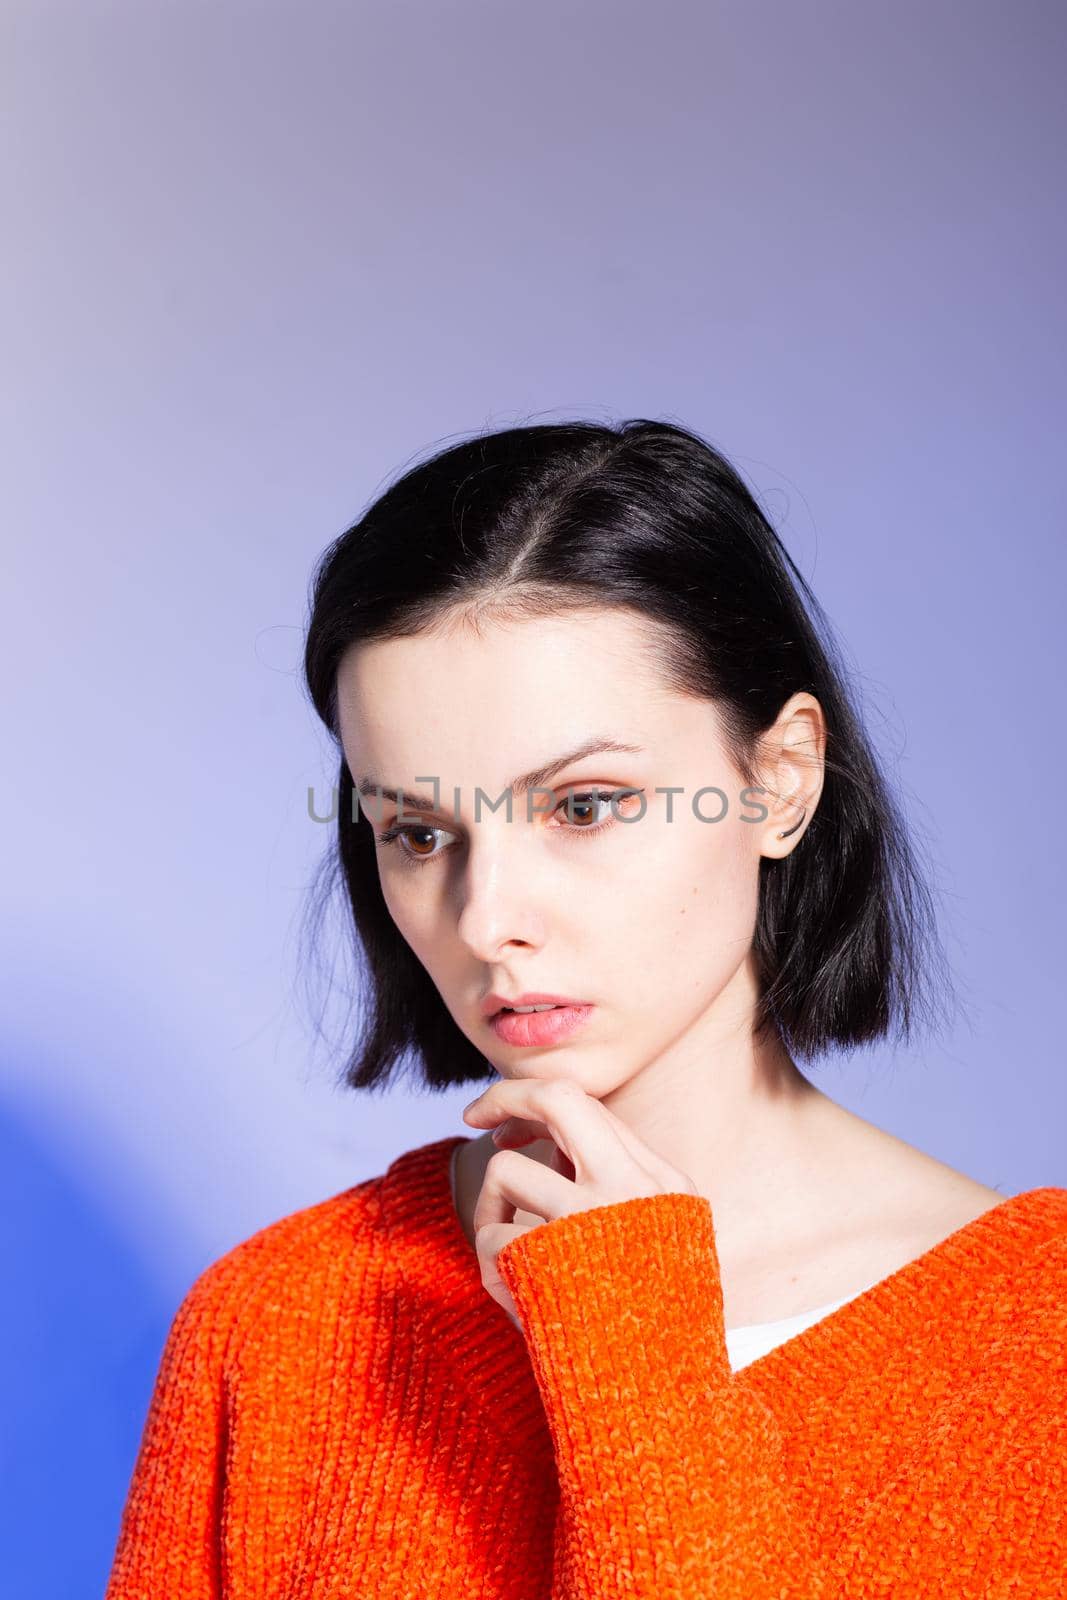 beautiful girl in an orange sweater on a blue background by shilovskaya